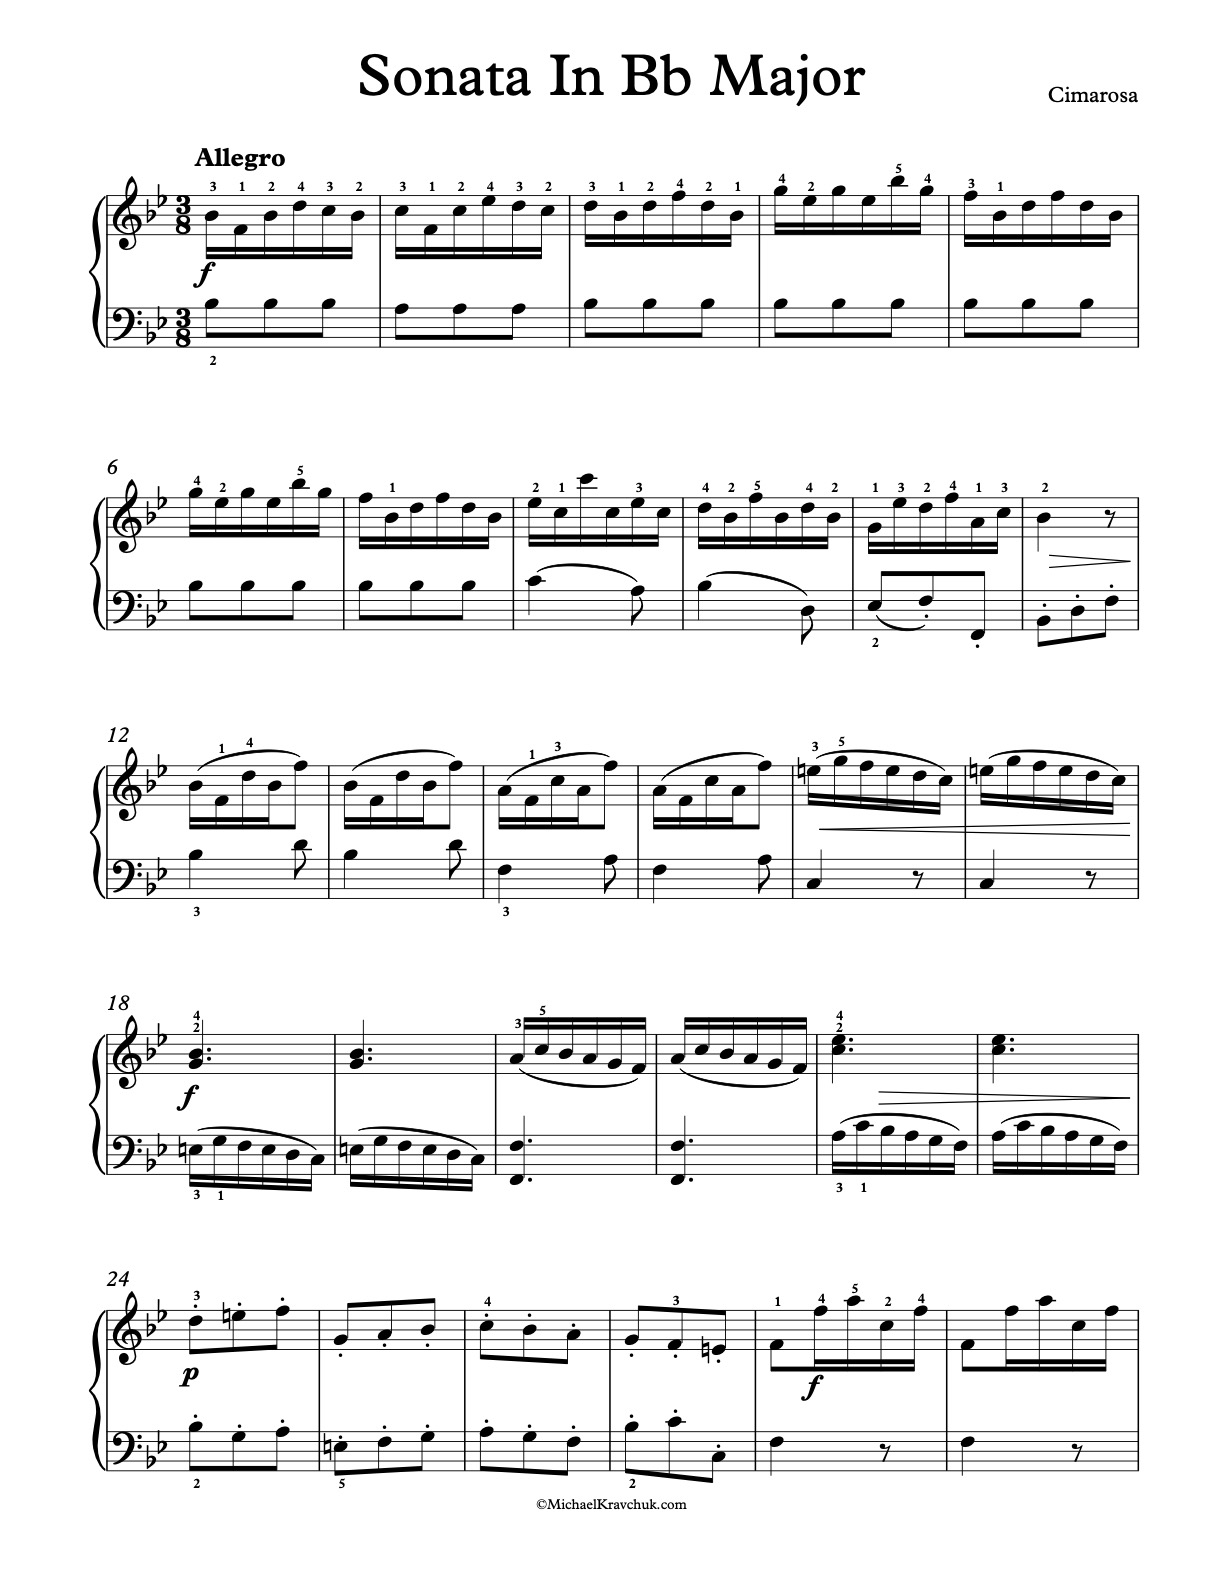 Sonata In Bb Major Piano Sheet Music